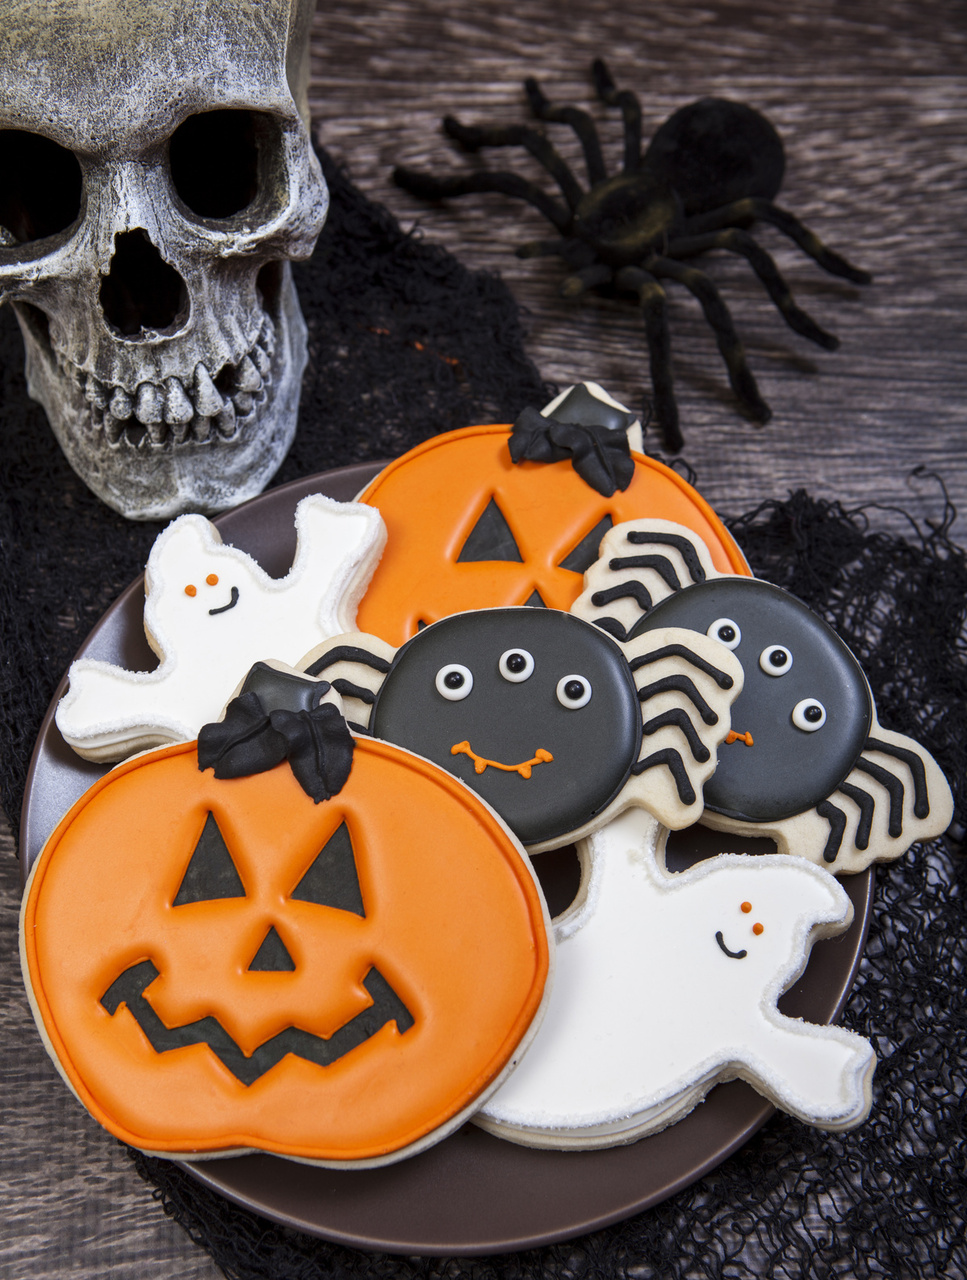 Spooky Cookie: Halloween Cookie Decorations